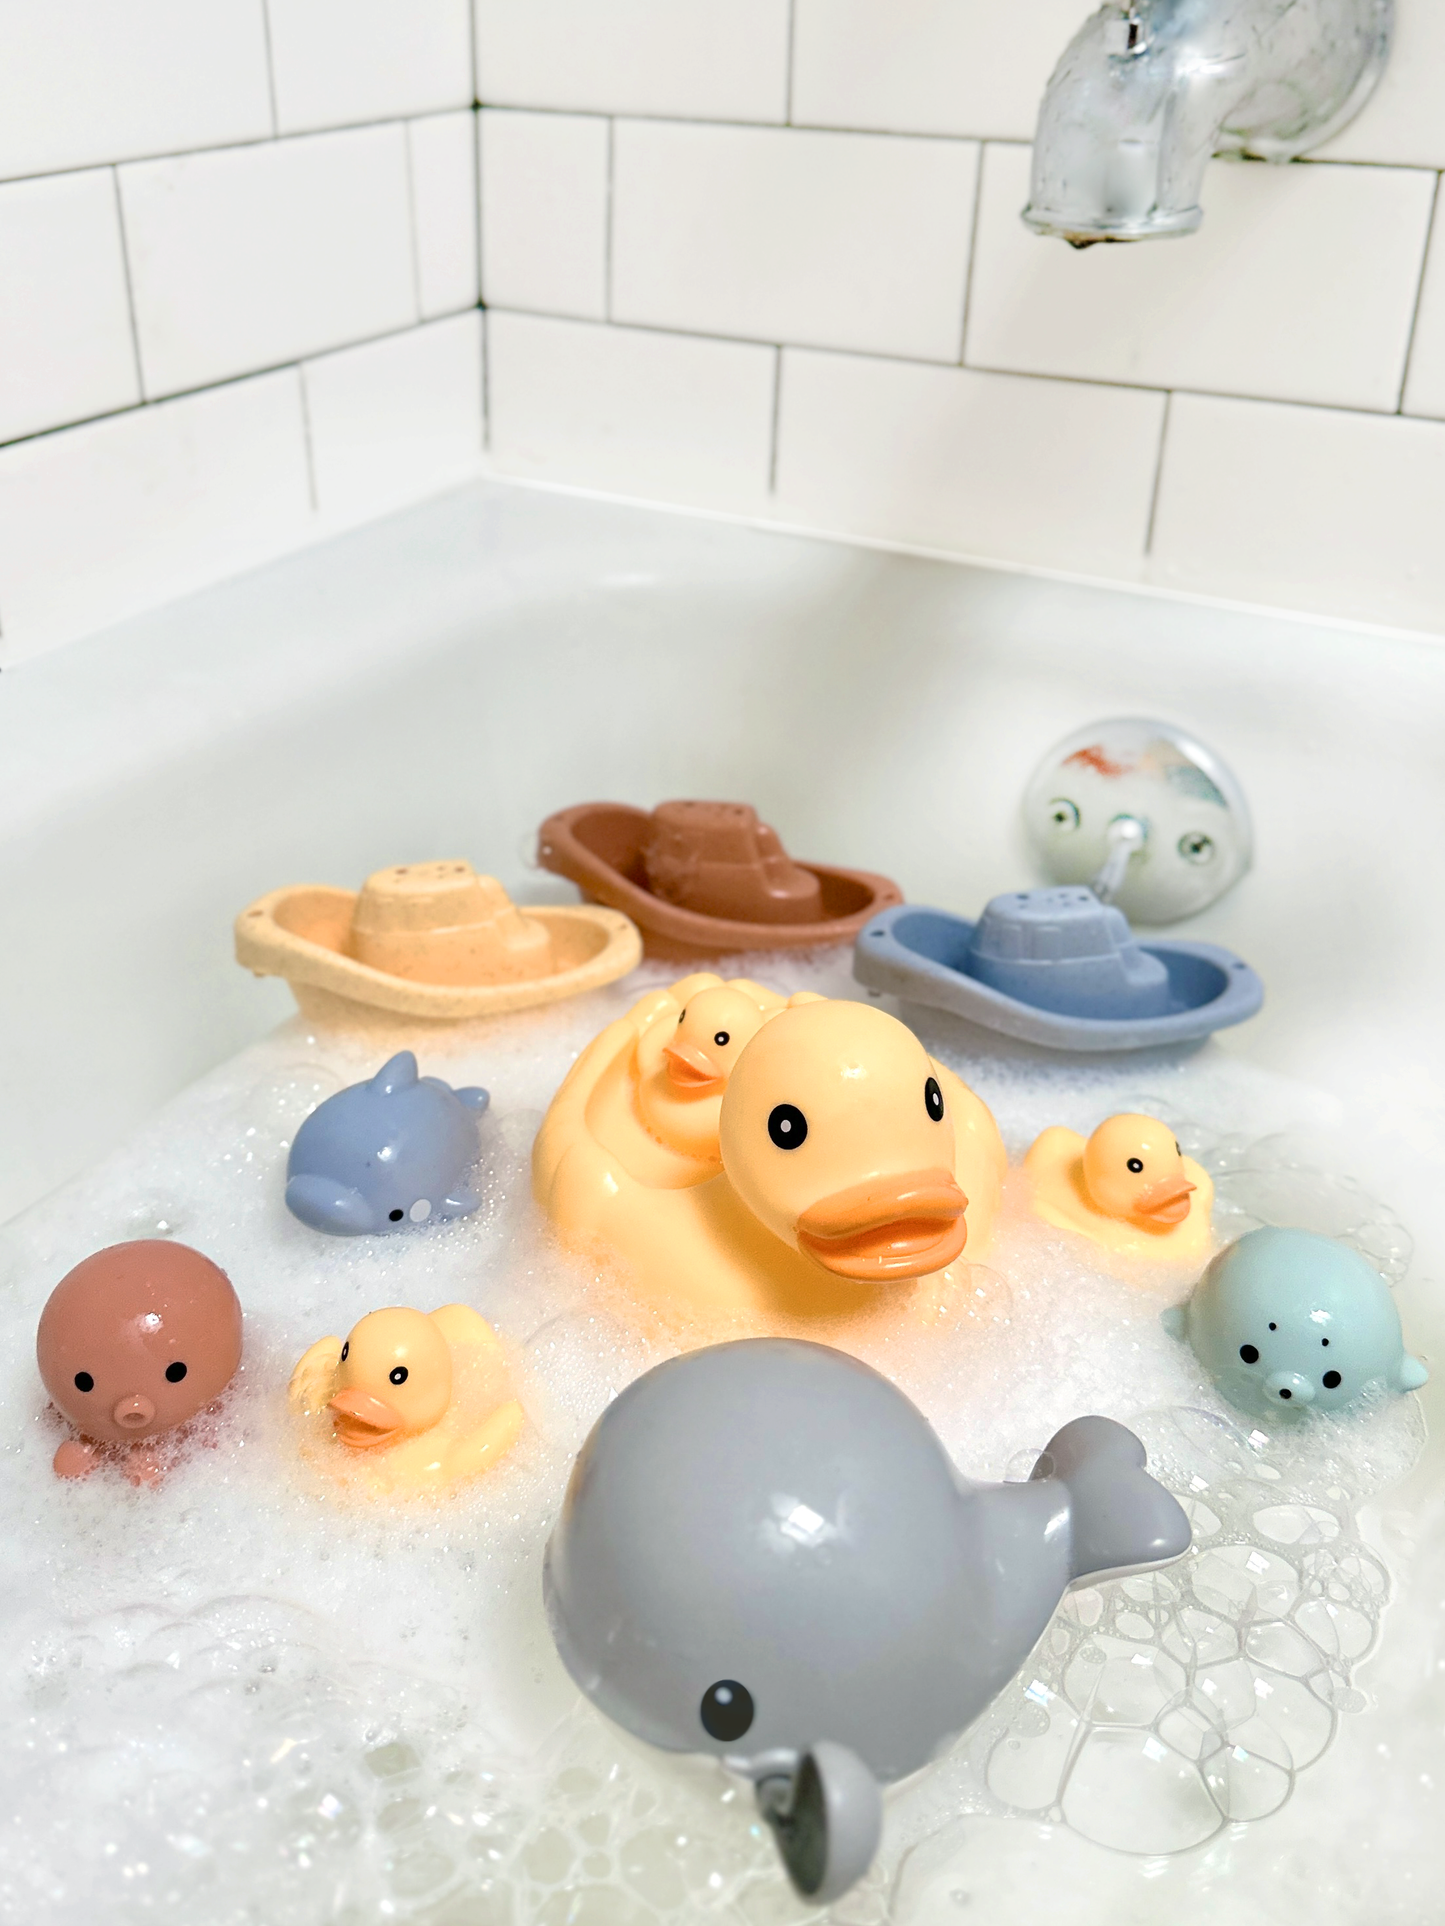 Bath Gift Set - My First Bathtime (12 Piece)